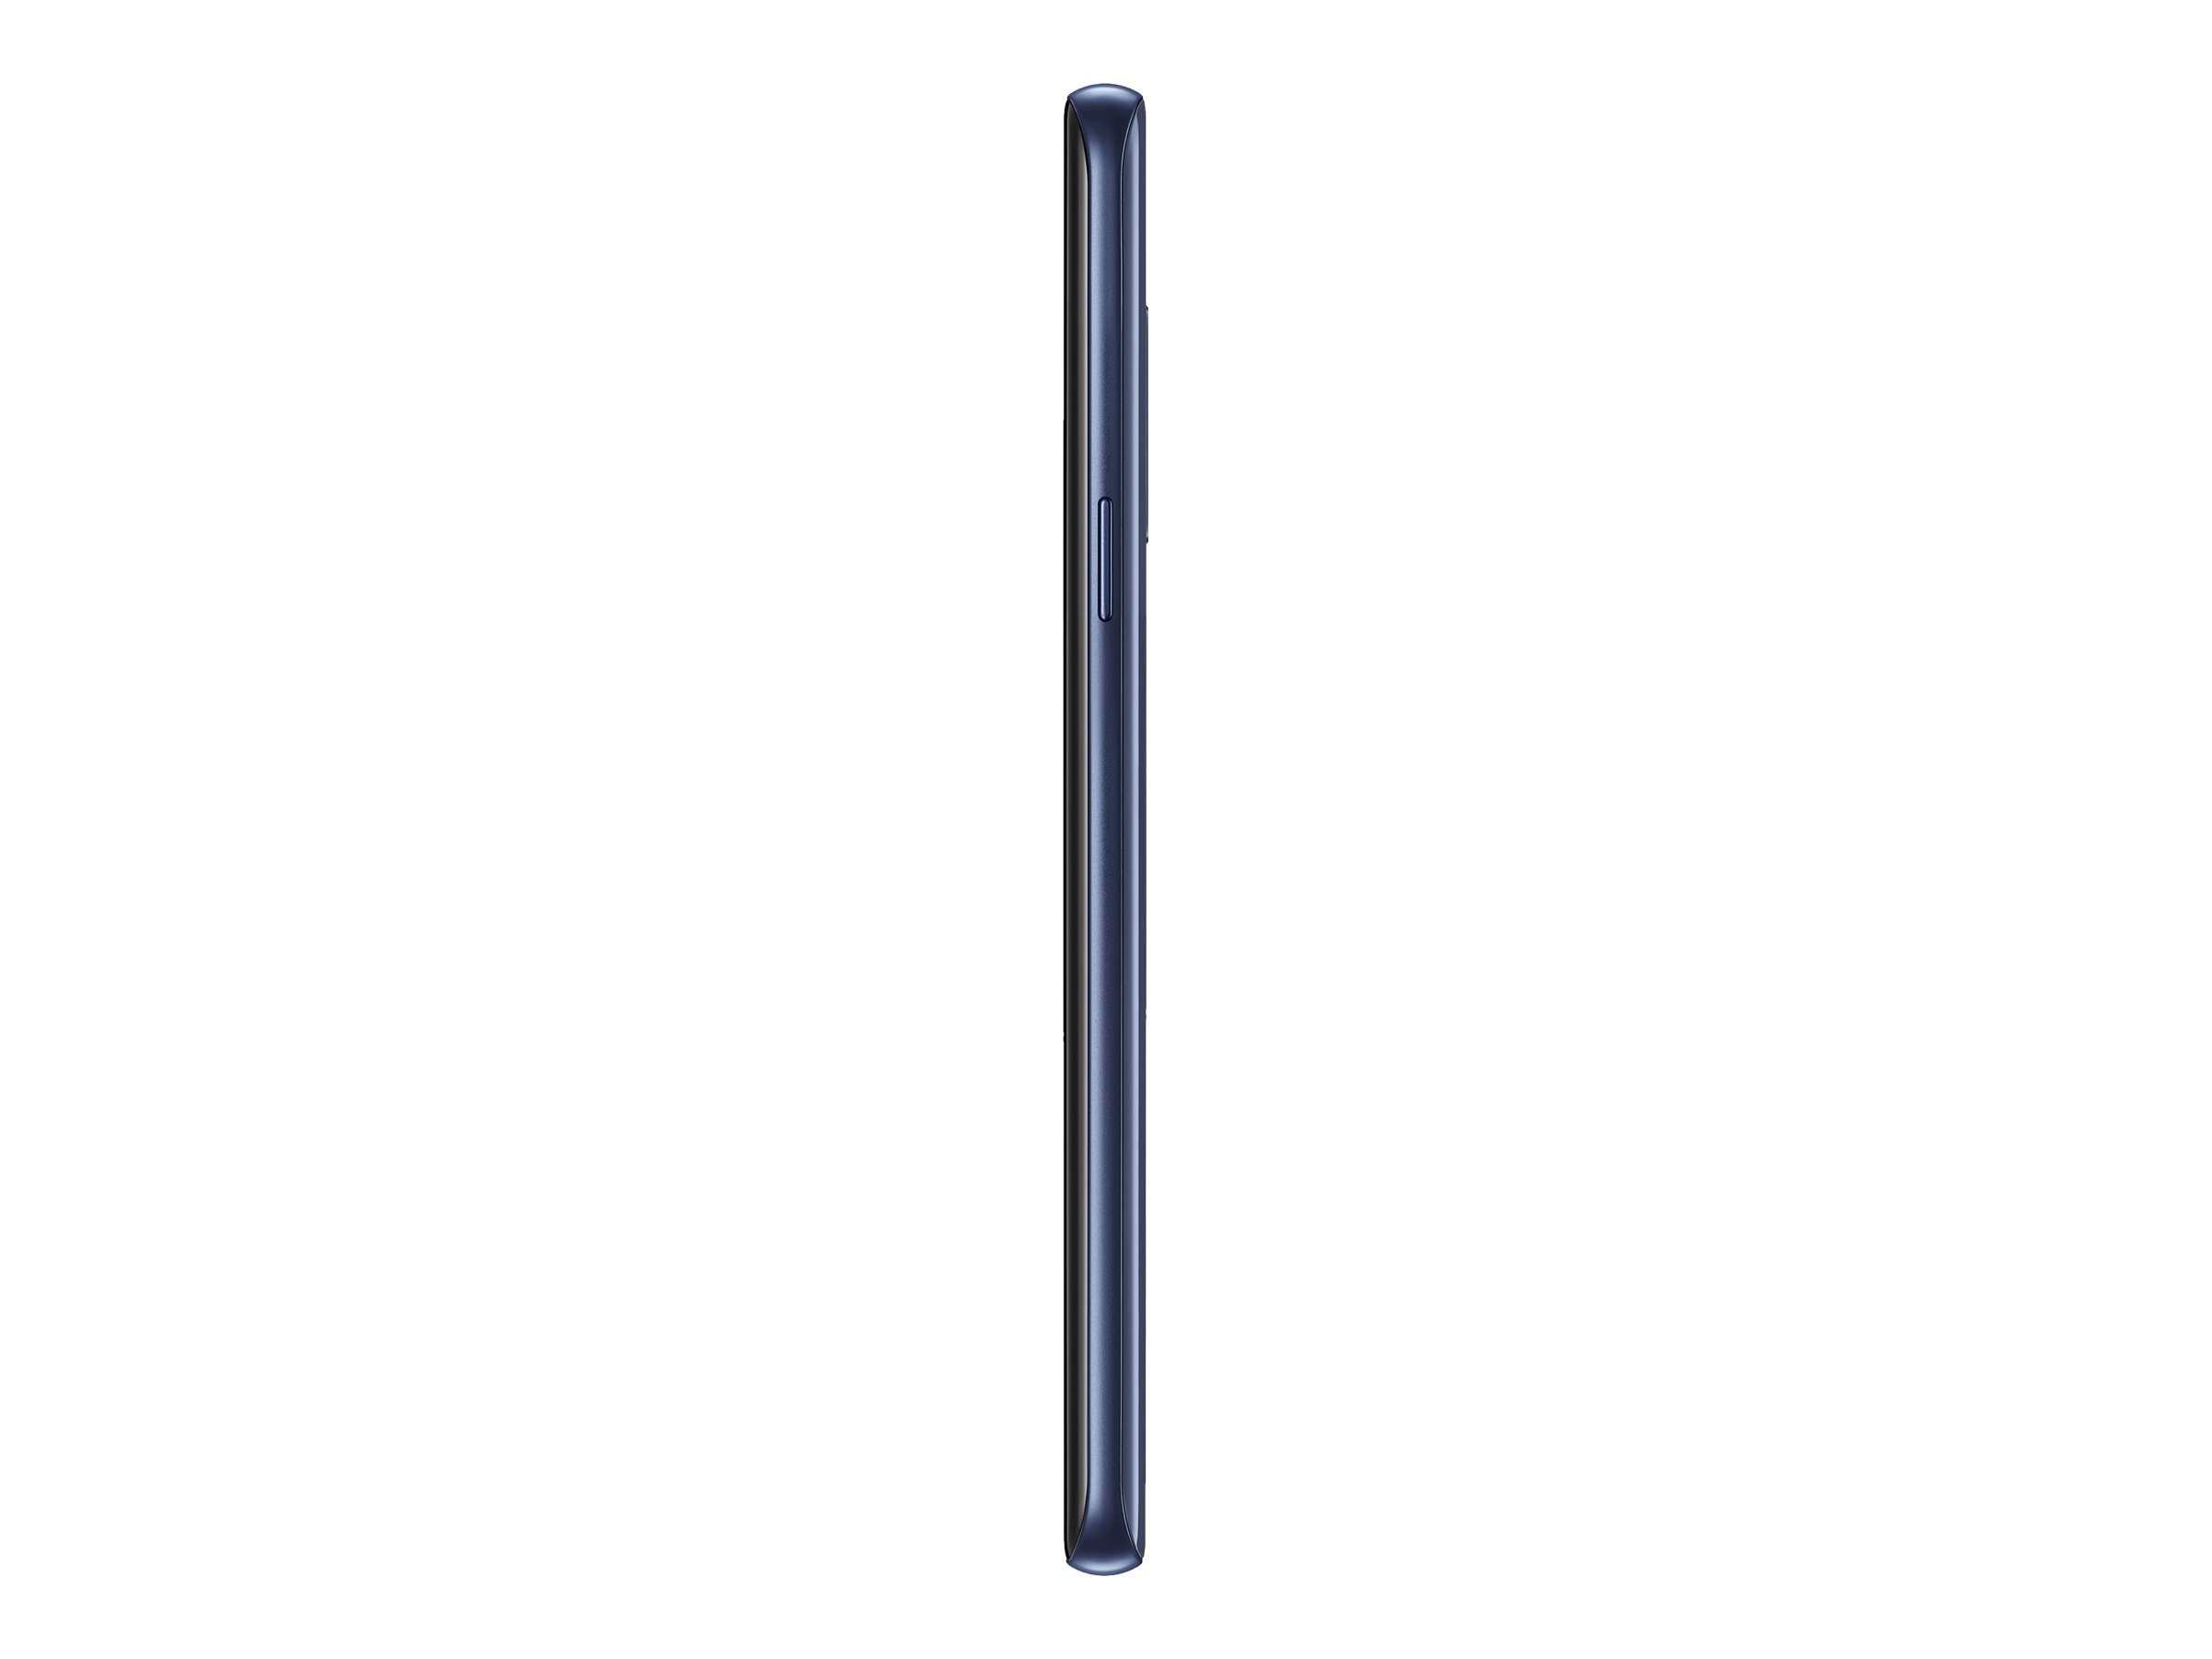 Pre-Owned Samsung Galaxy S9 Blue (Verizon) (Refurbished: Good) - image 5 of 6